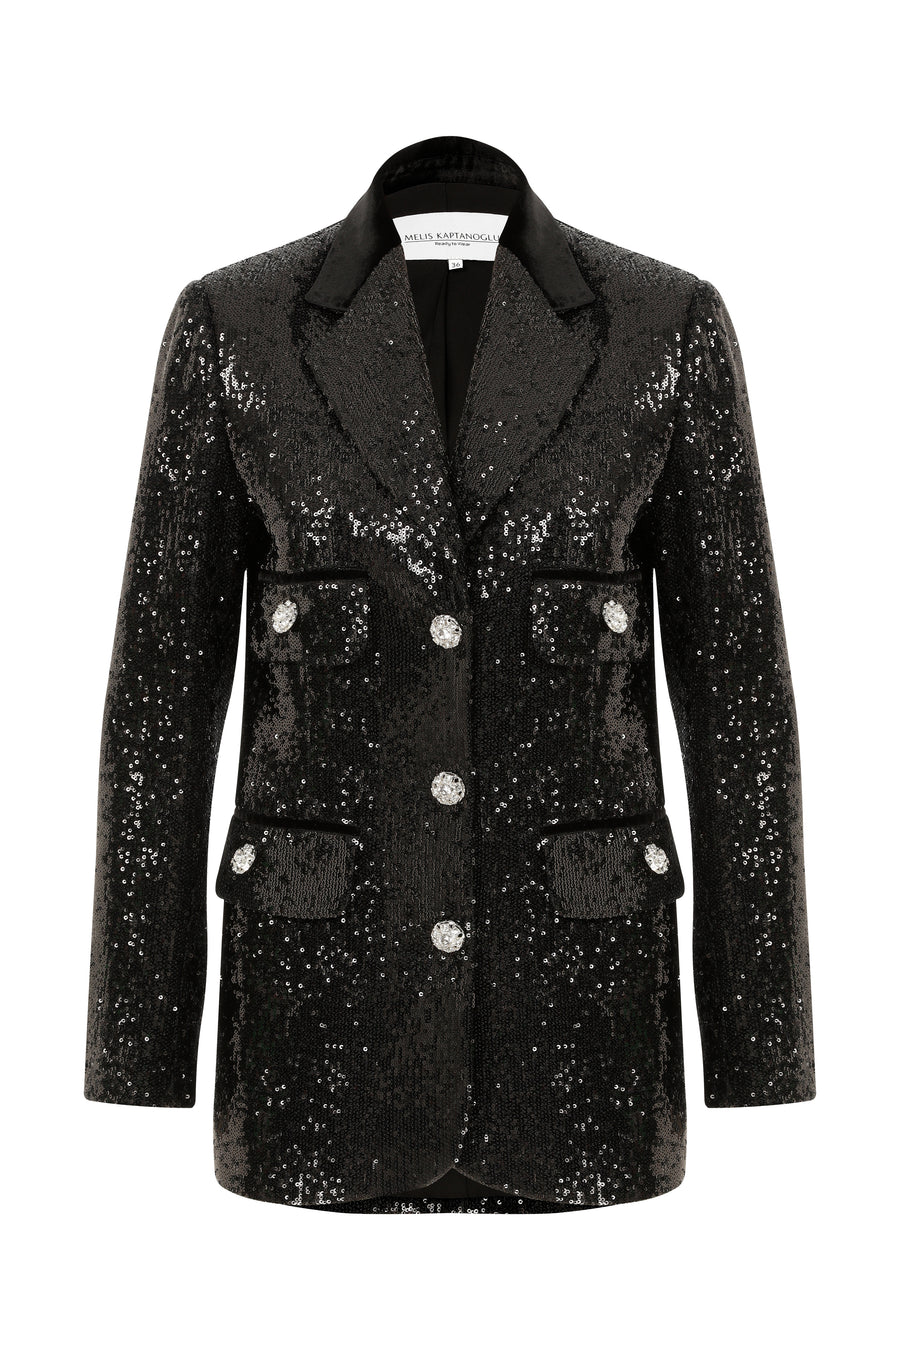 Melis Black Sequin Jacket